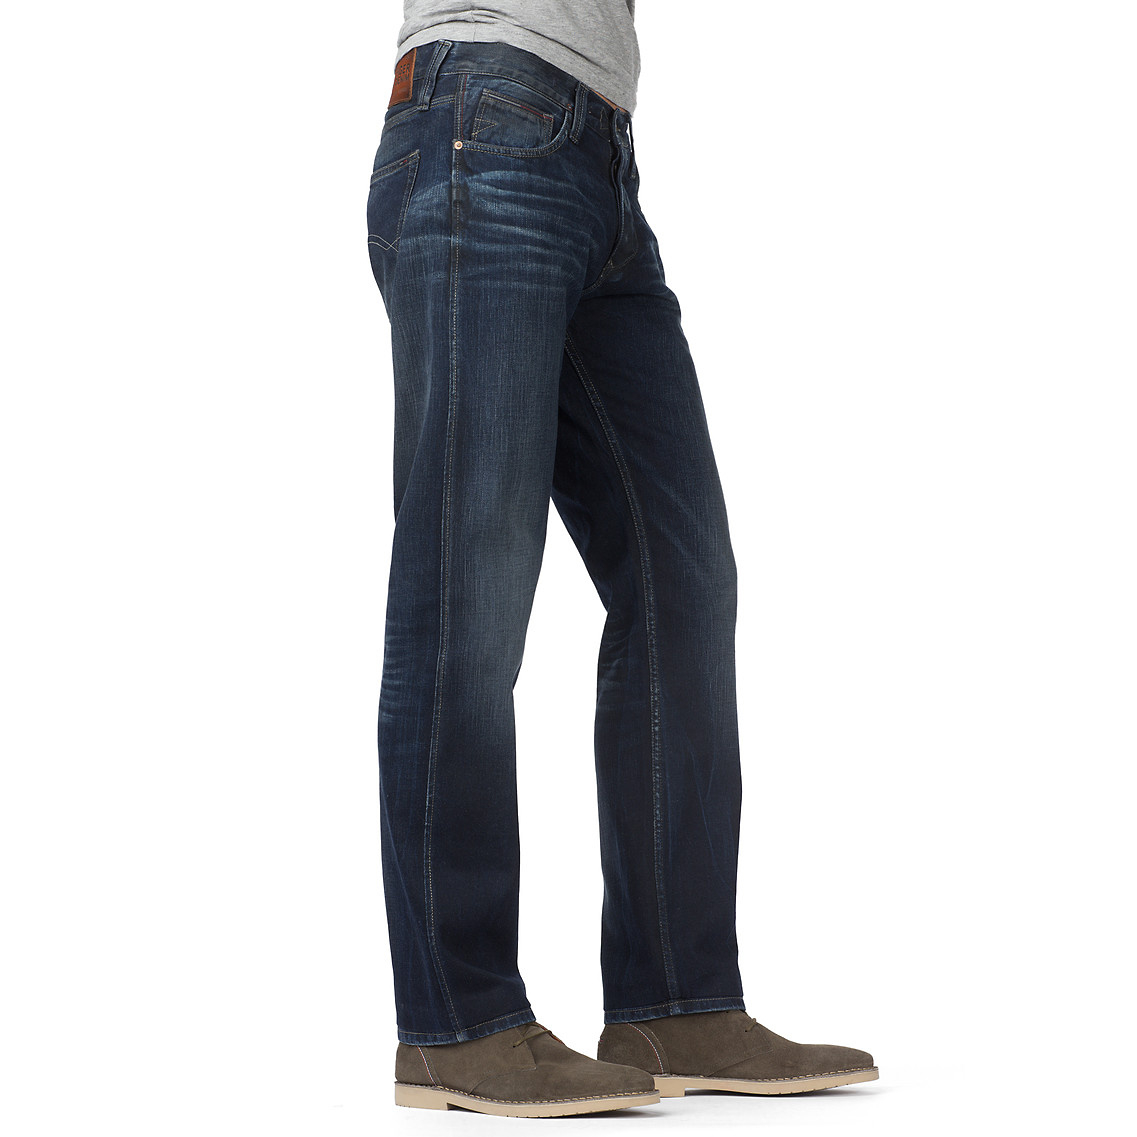 hilfiger ronan jeans